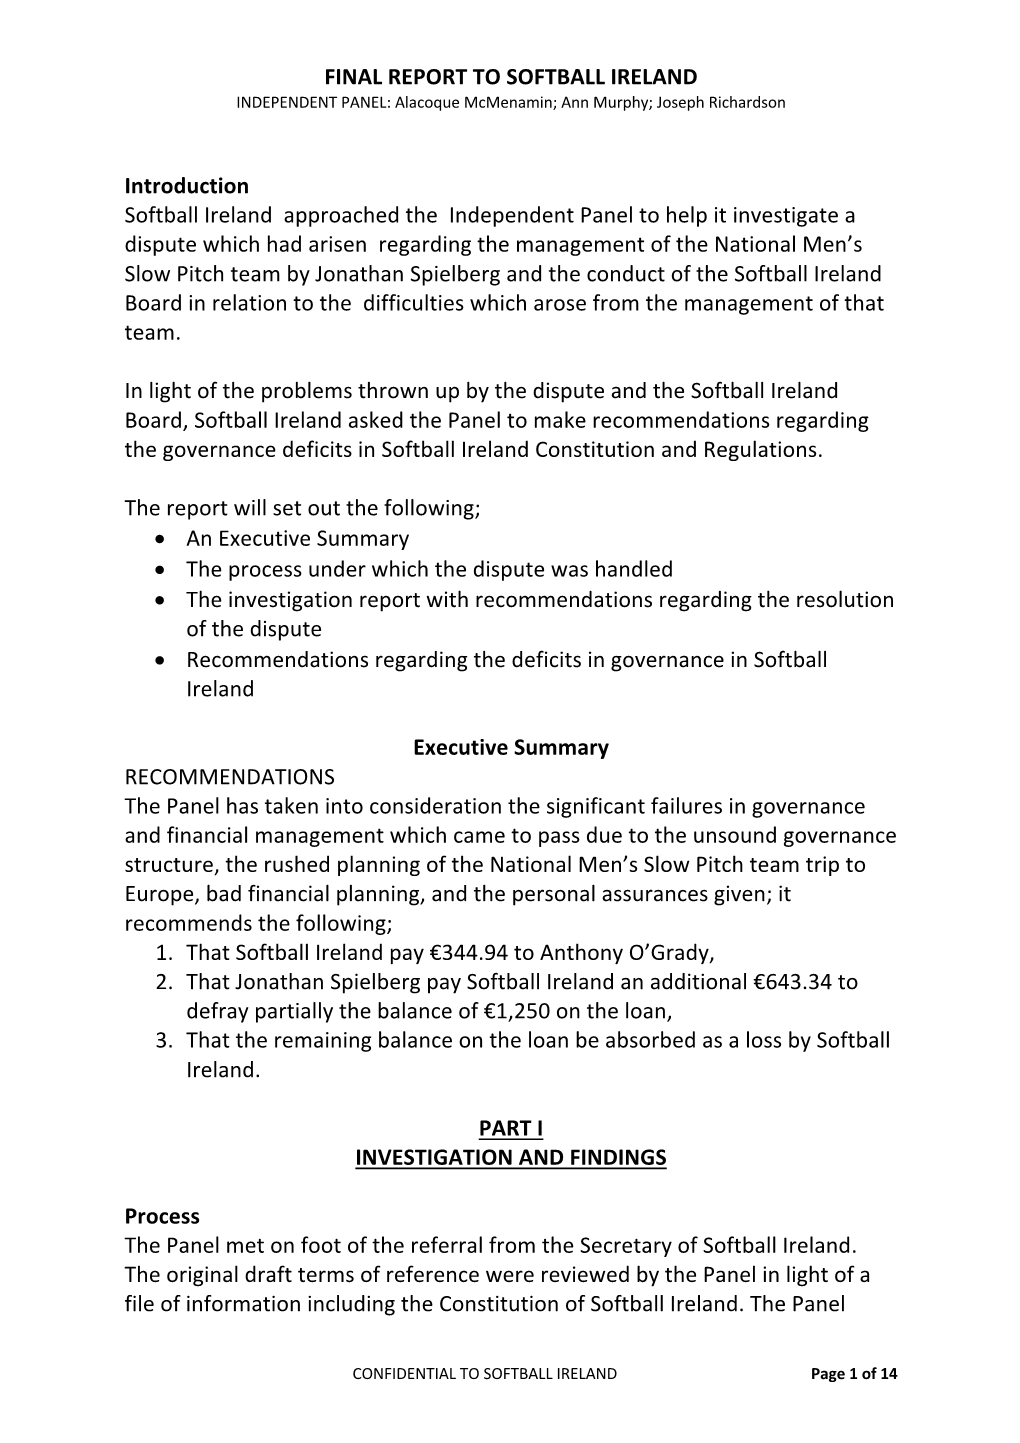 FINAL REPORT to SOFTBALL IRELAND Introduction Softball